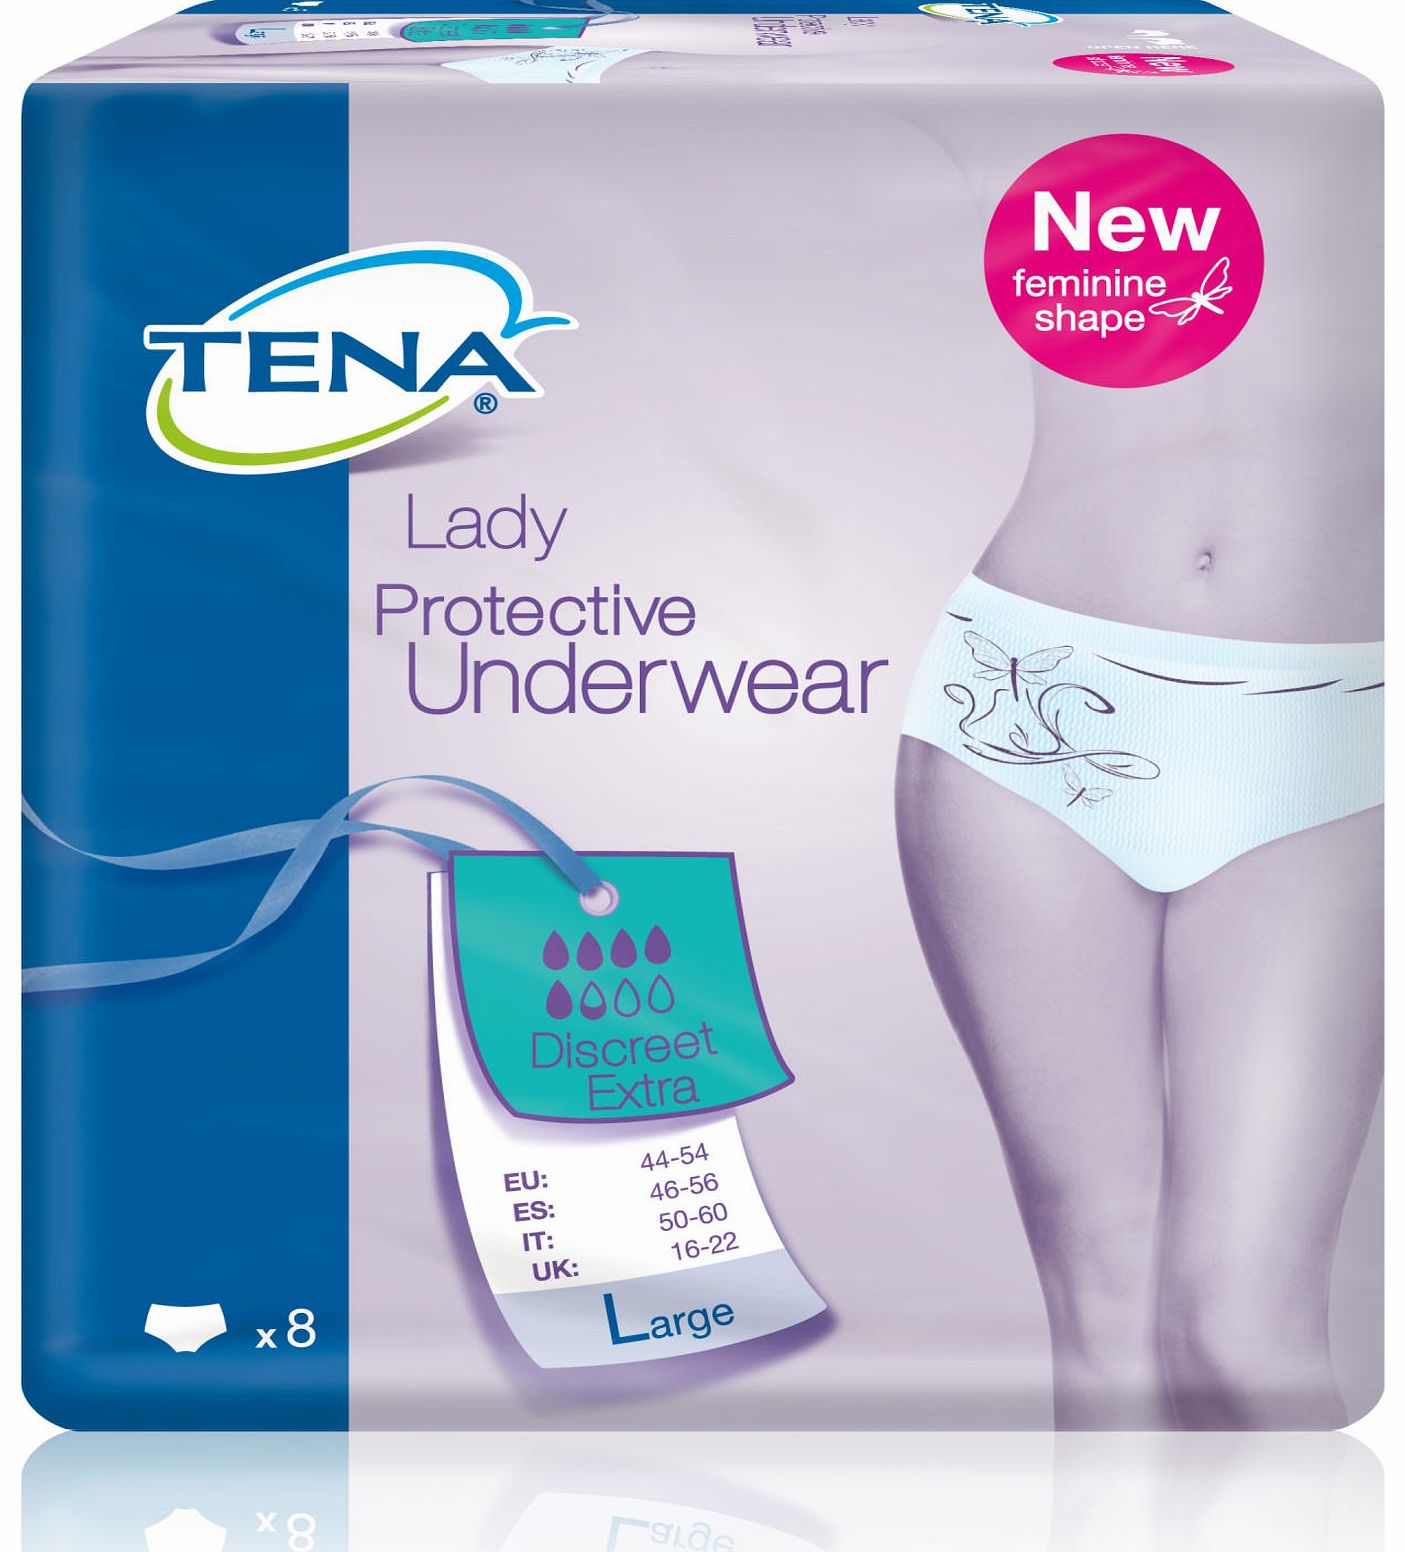 Lady Protective Underwear Discreet Extra